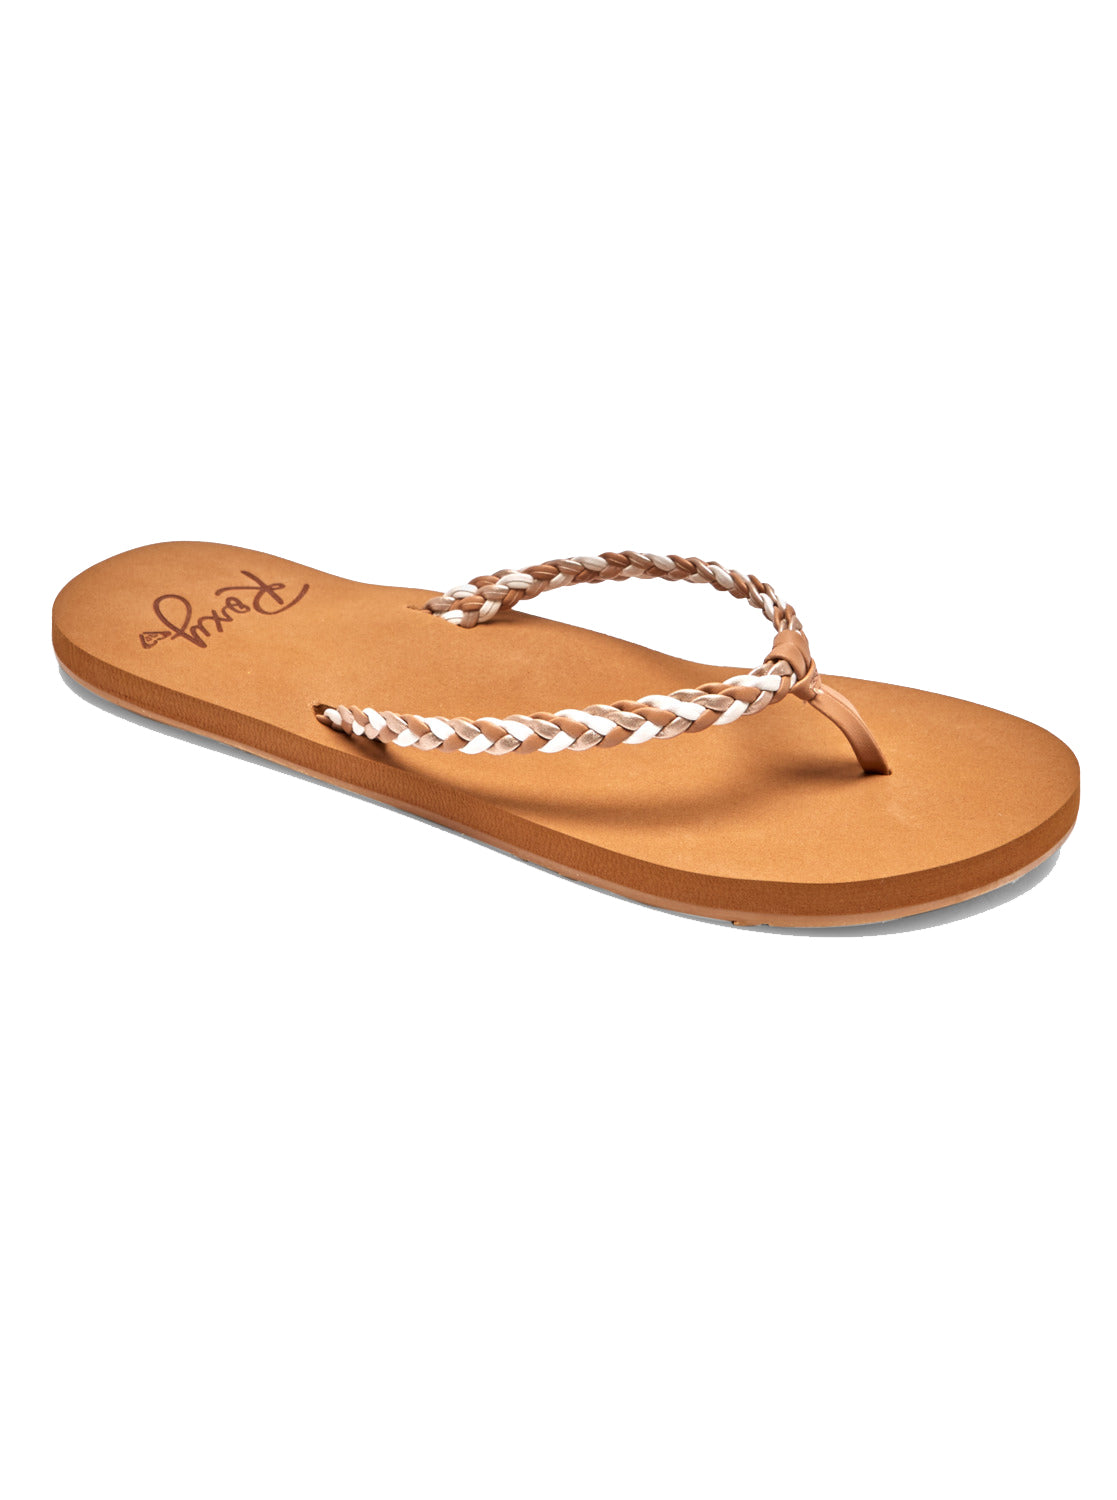 Roxy Costas Womens Sandal TG1-Tan-Gold 10